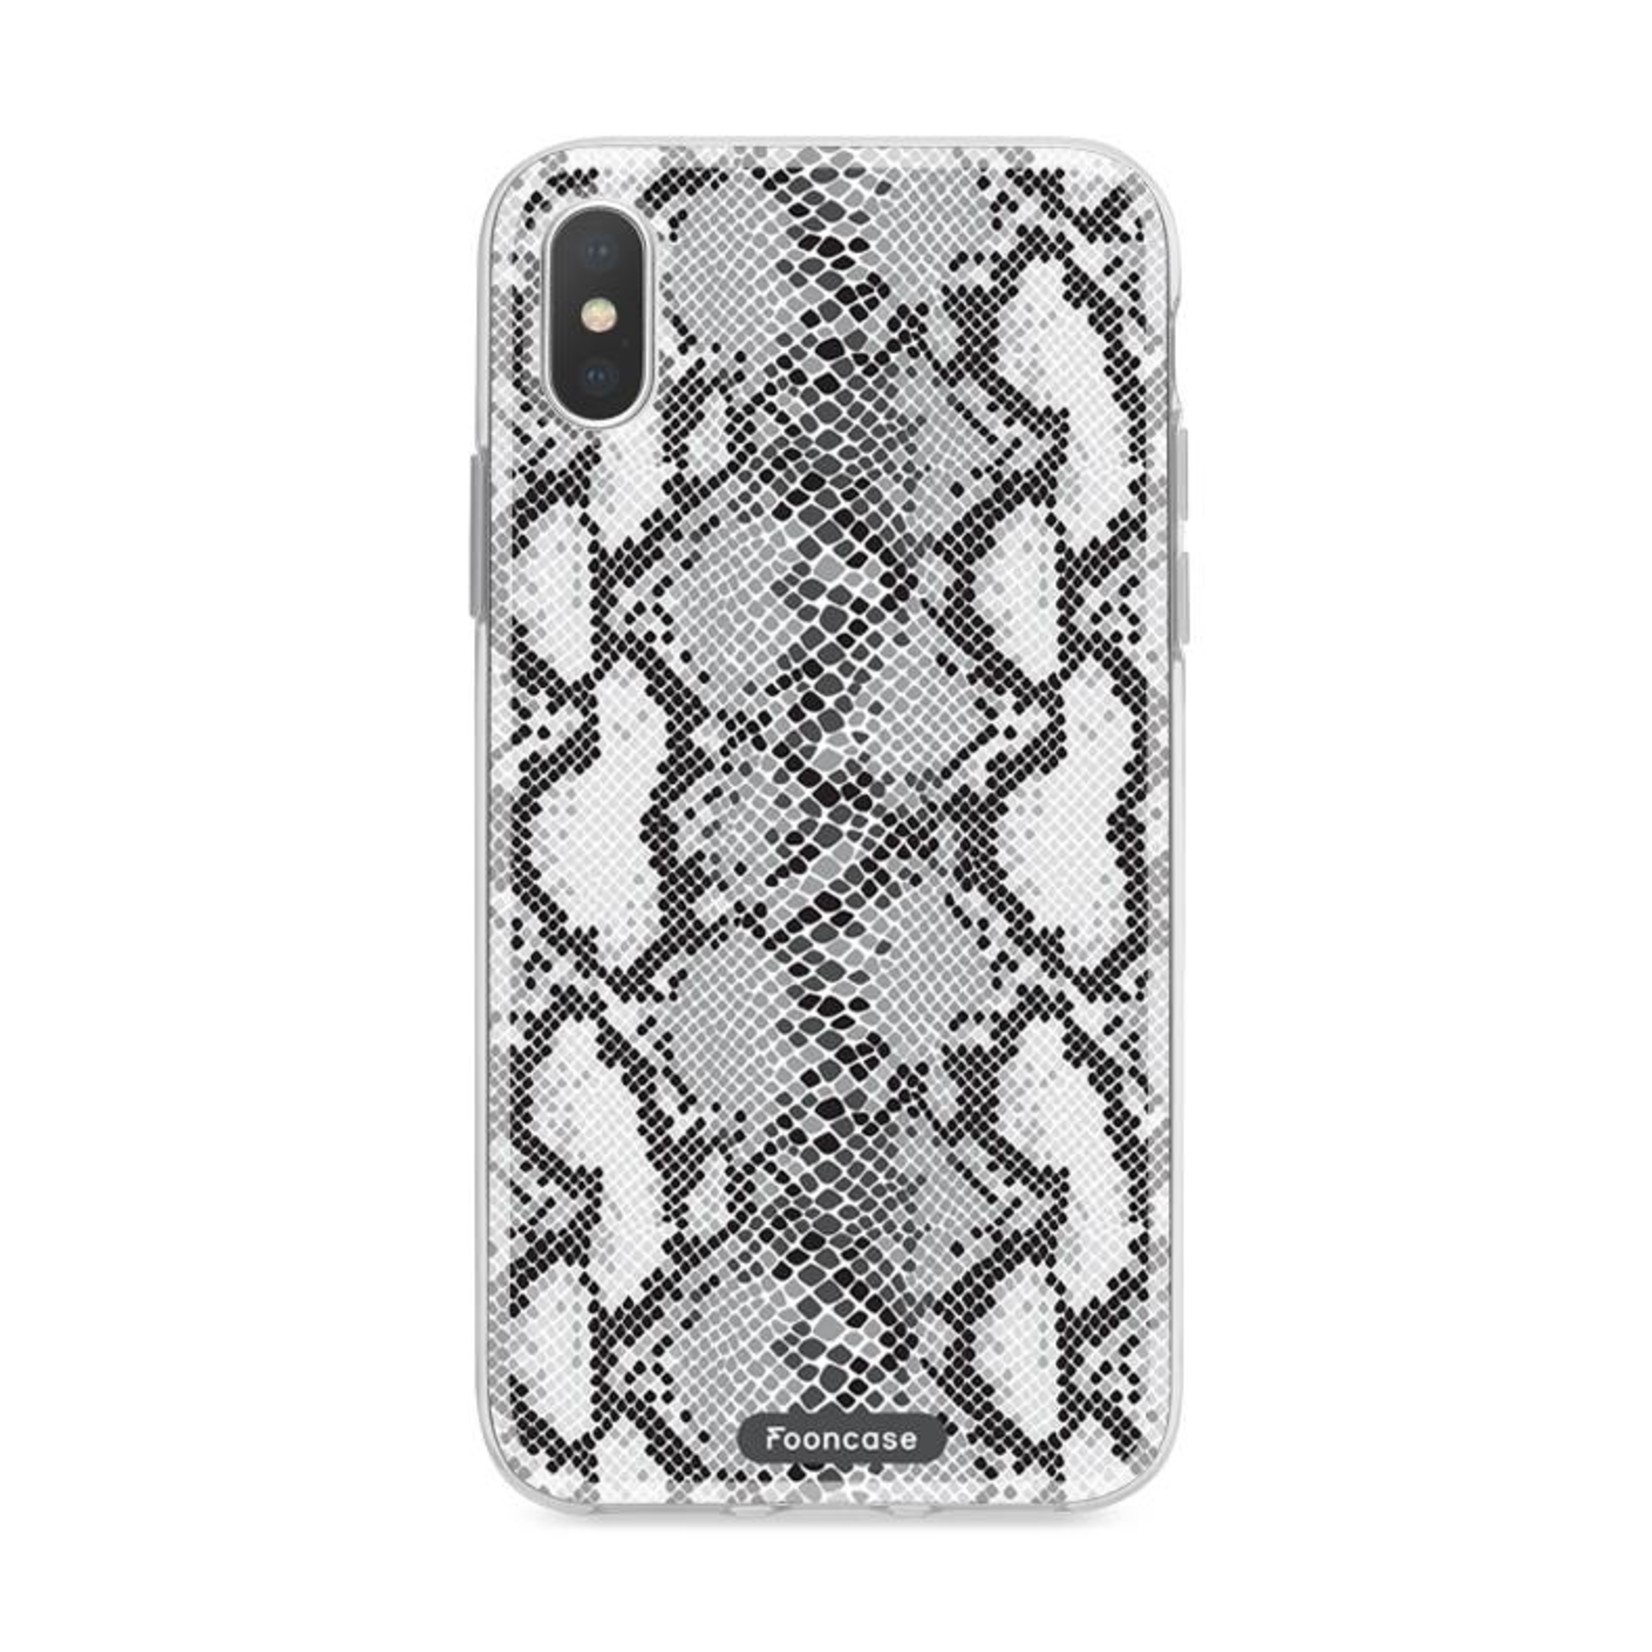 FOONCASE iPhone X hoesje TPU Soft Case - Back Cover - Snake it / Slangen print